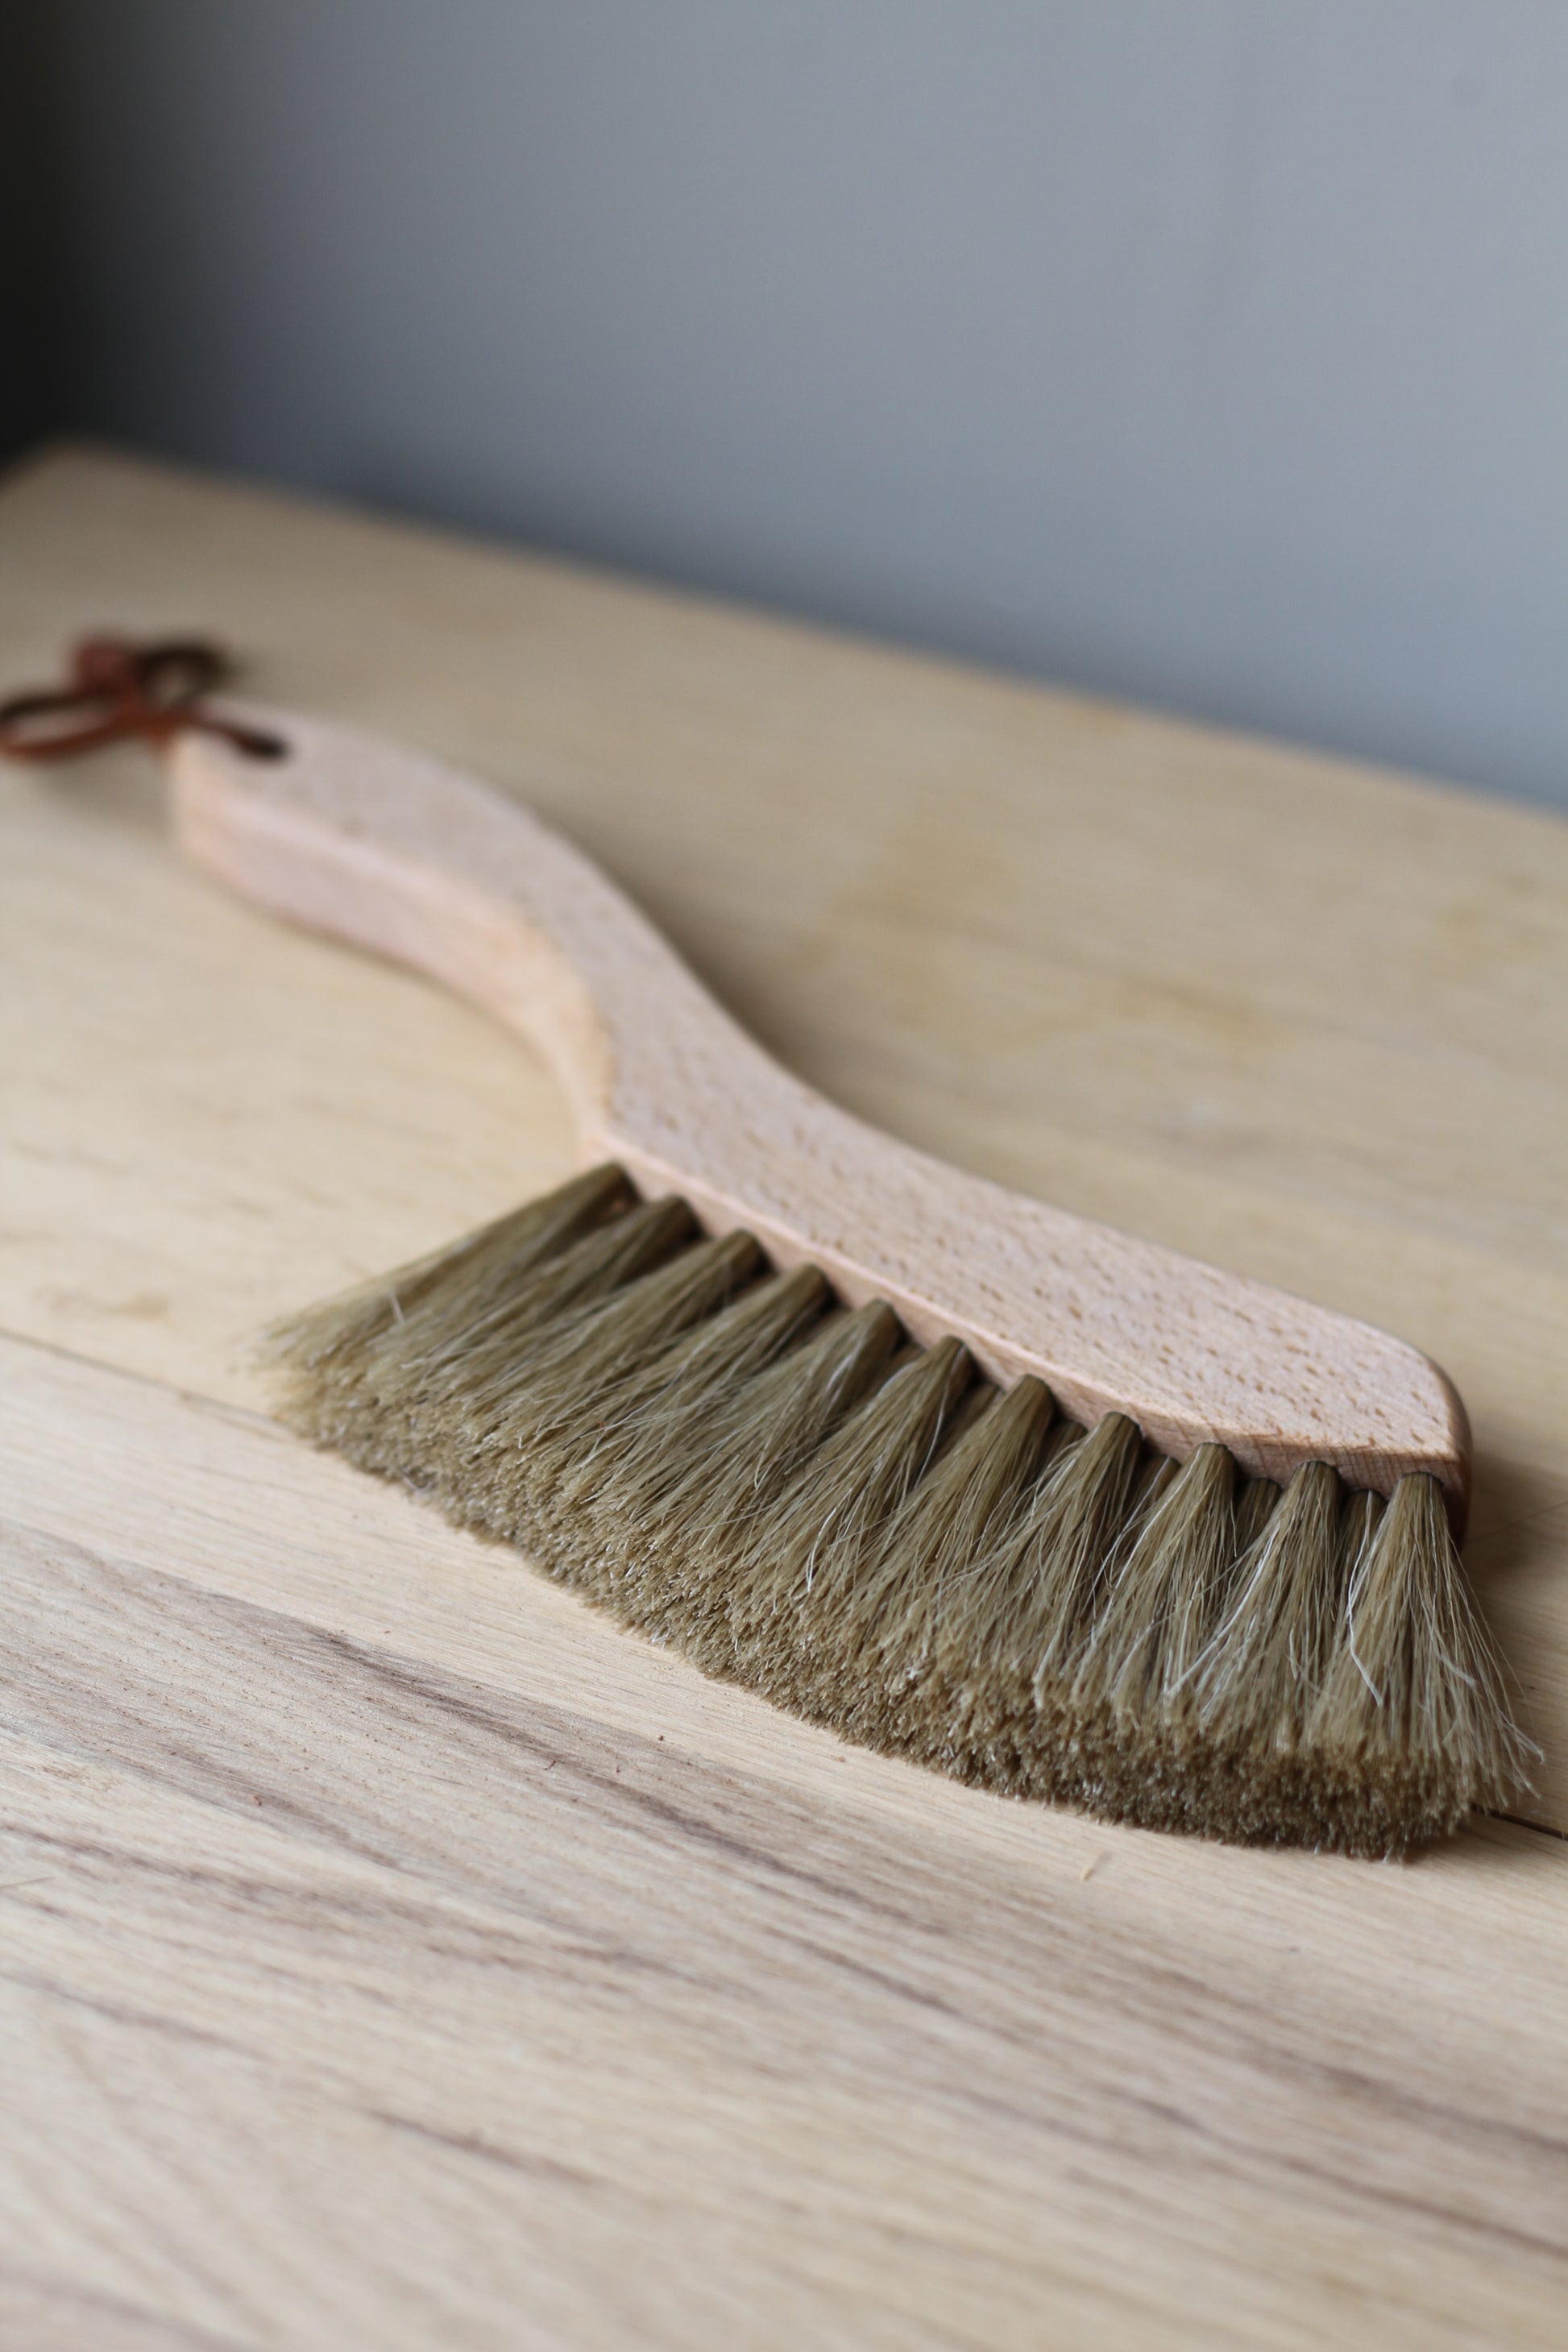 shaped wooden brush